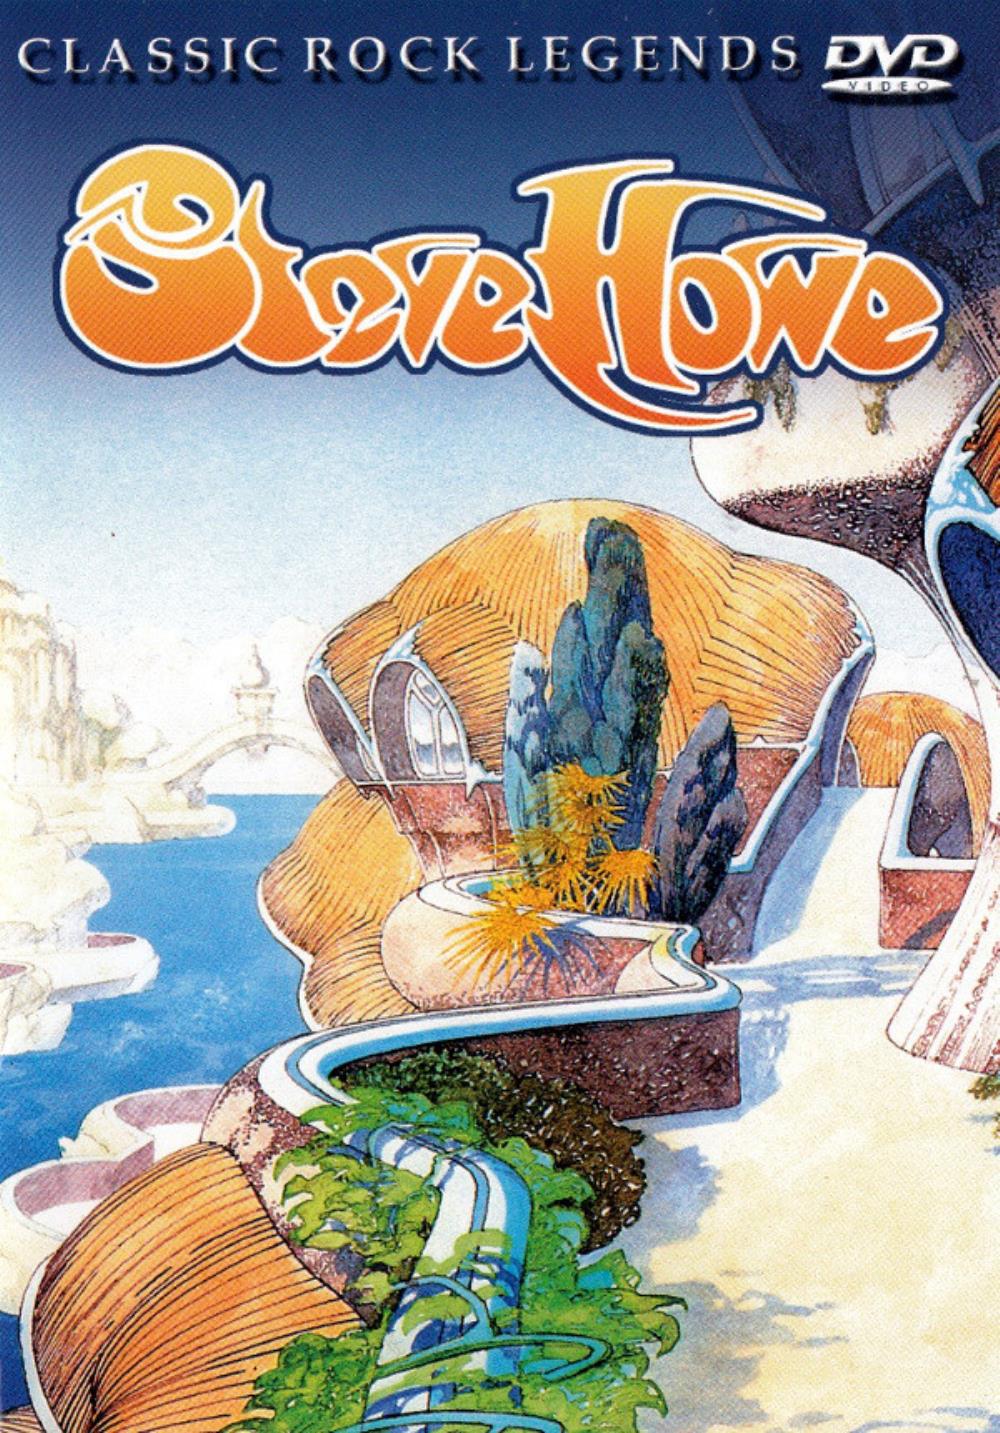 Steve Howe Classic Rock Legends - Steve Howe album cover